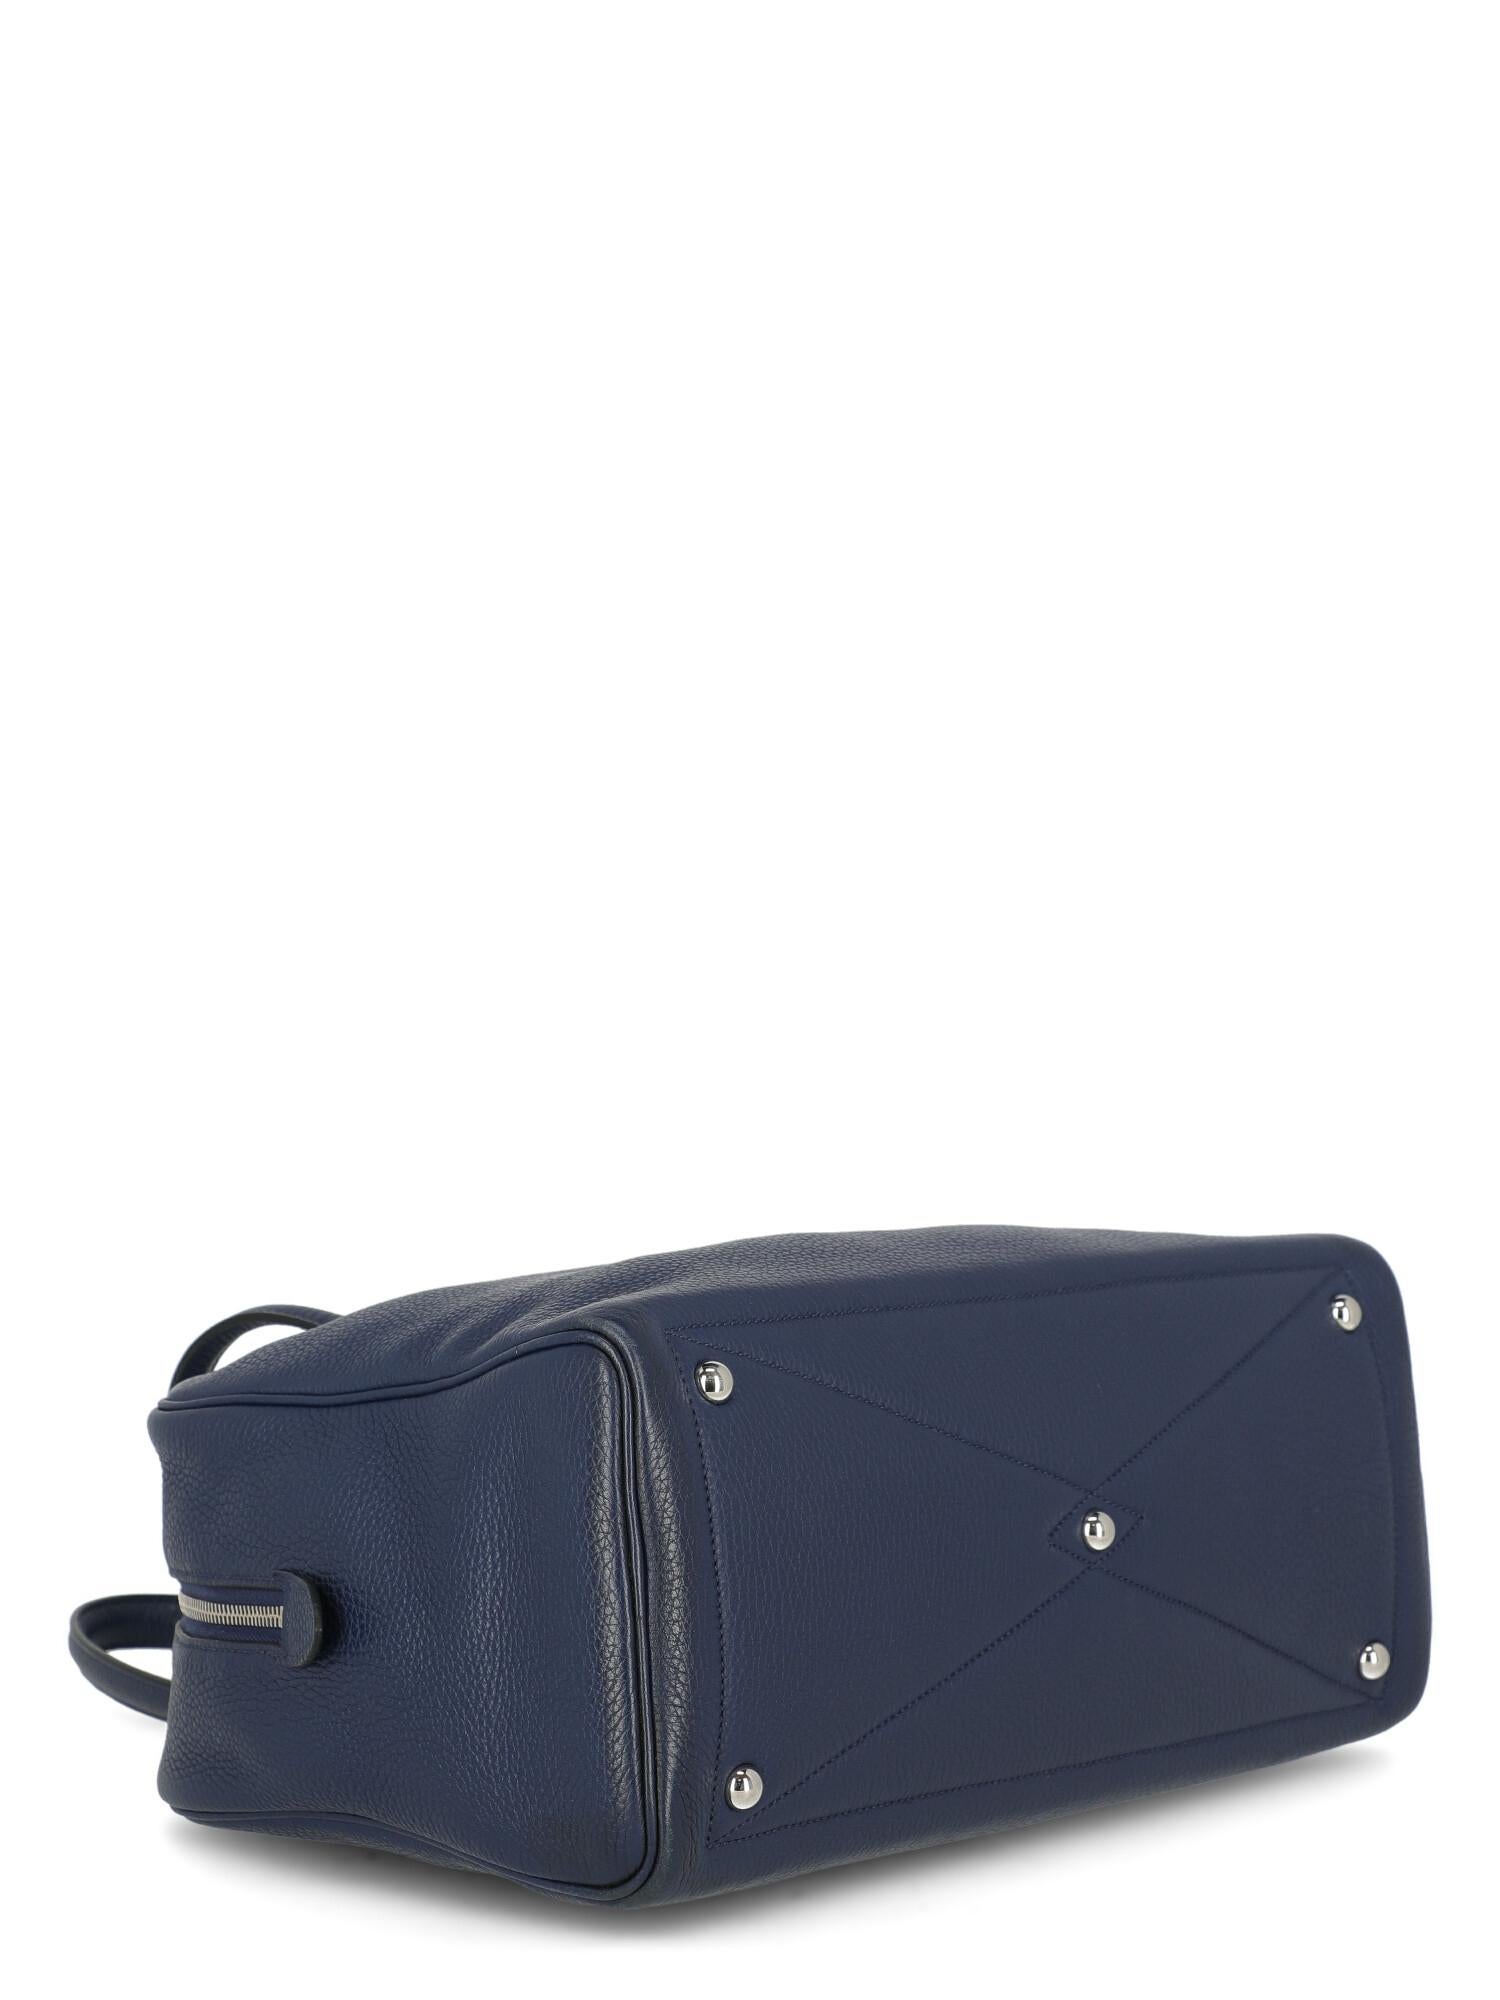 Hermès Women's Handbag Victoria Navy Leather In Good Condition For Sale In Milan, IT